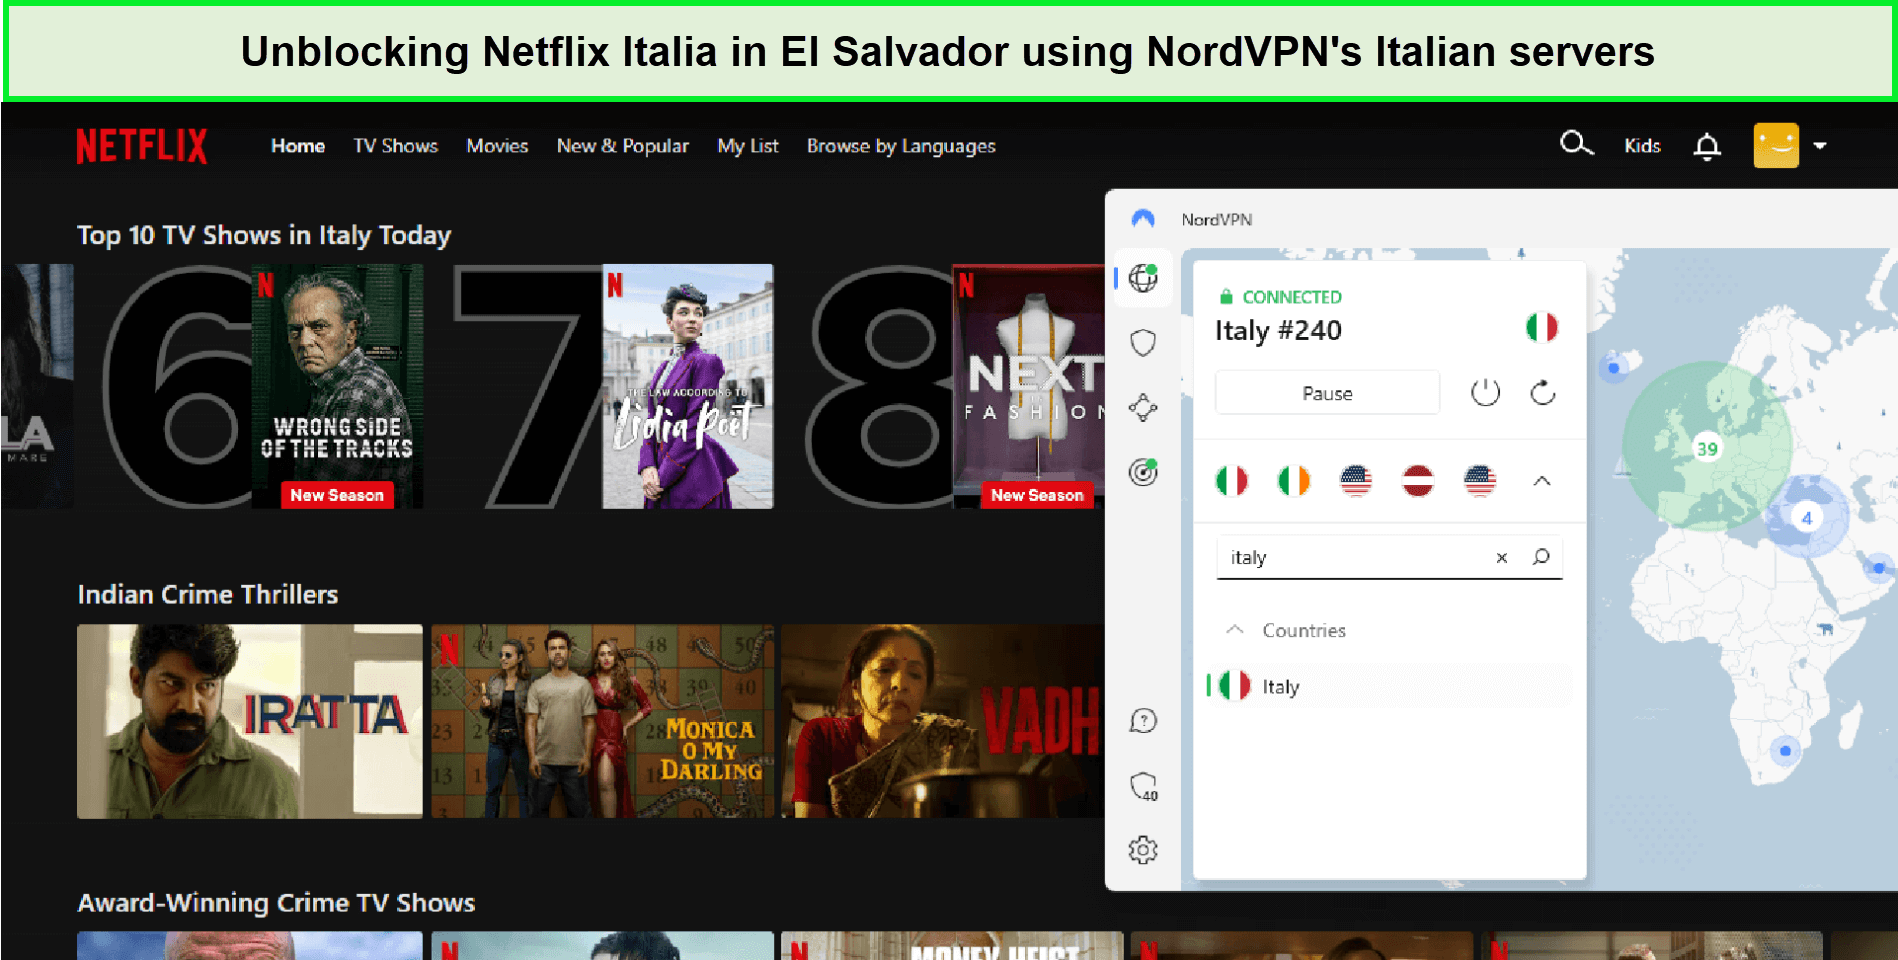 netflix-italia-in-el-salvador-nordvpn-italy-servers